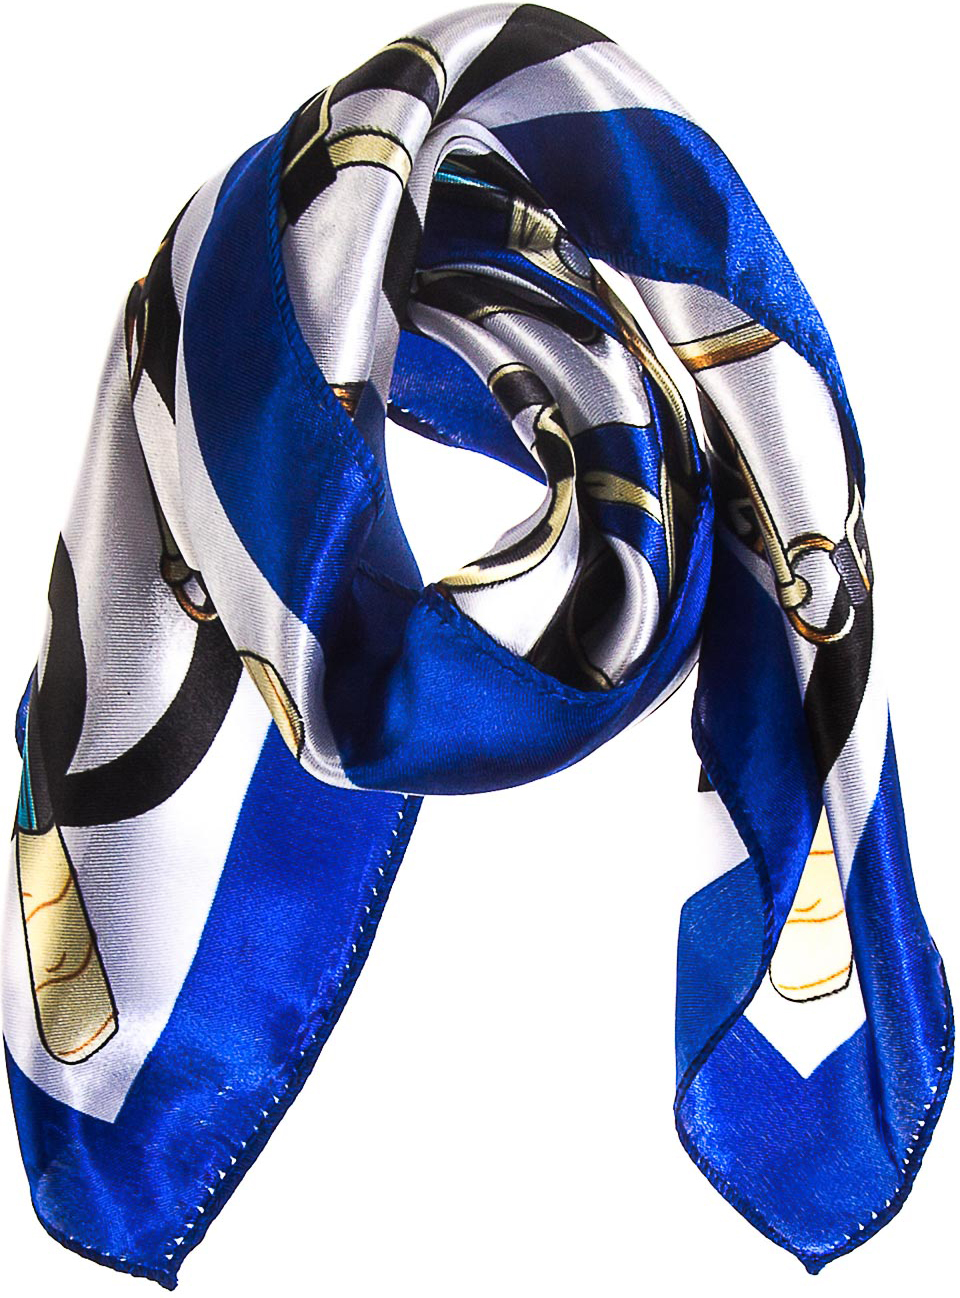 Платок женский Vittorio Richi, цвет: белый, синий. K02P1516. Размер 50 х 50 см